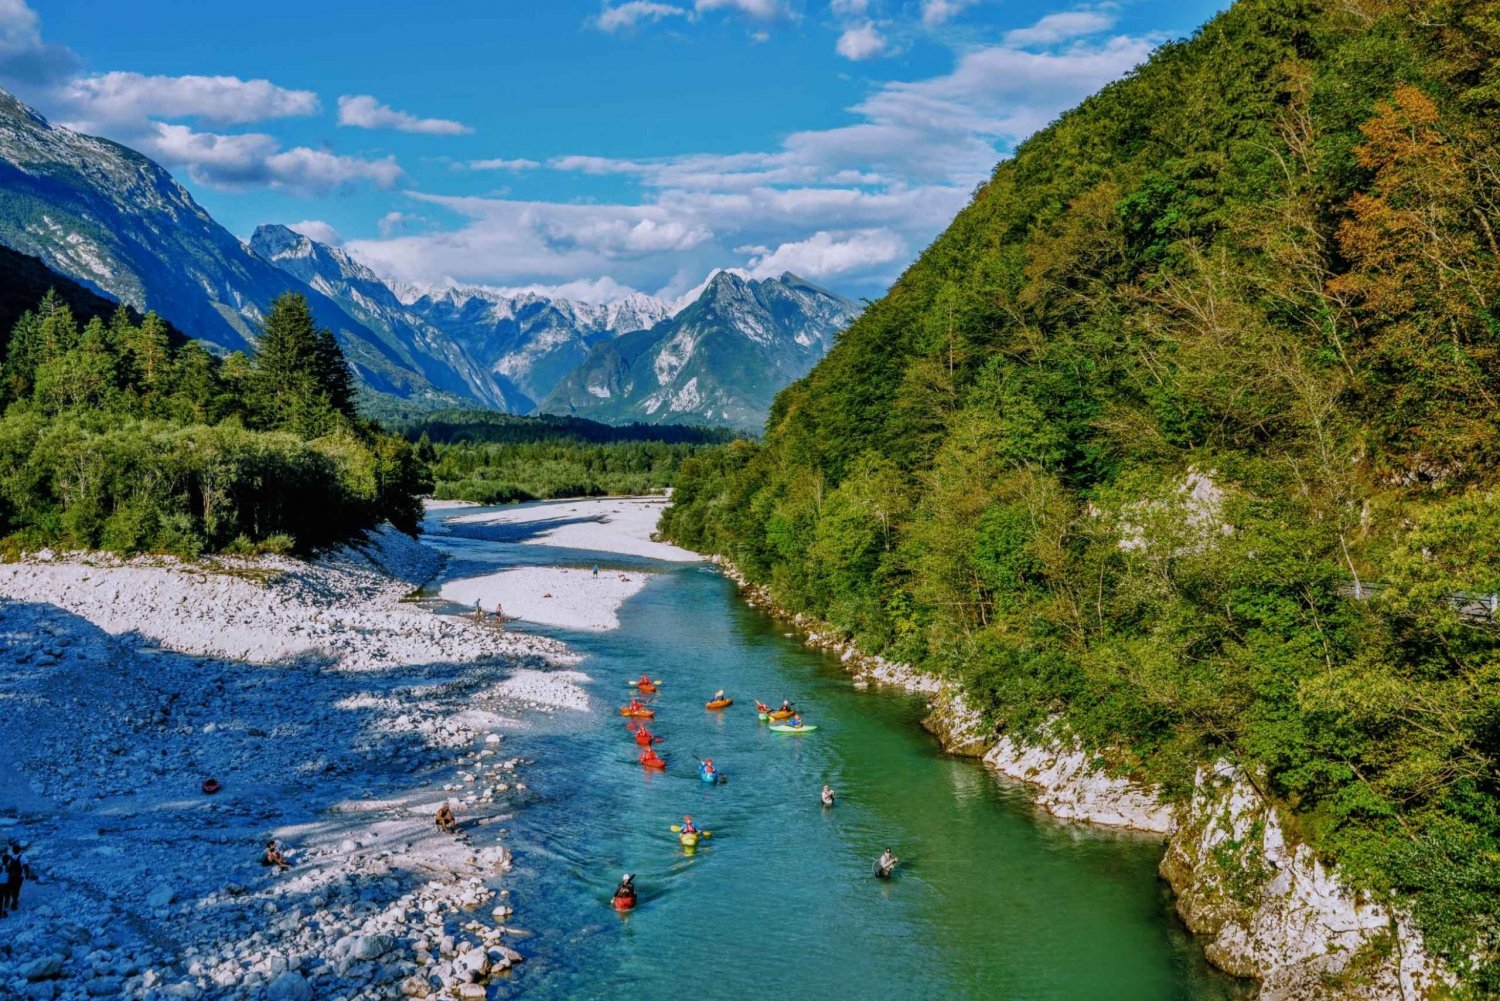 Fiume Isonzo: Kayak per tutti i livelli